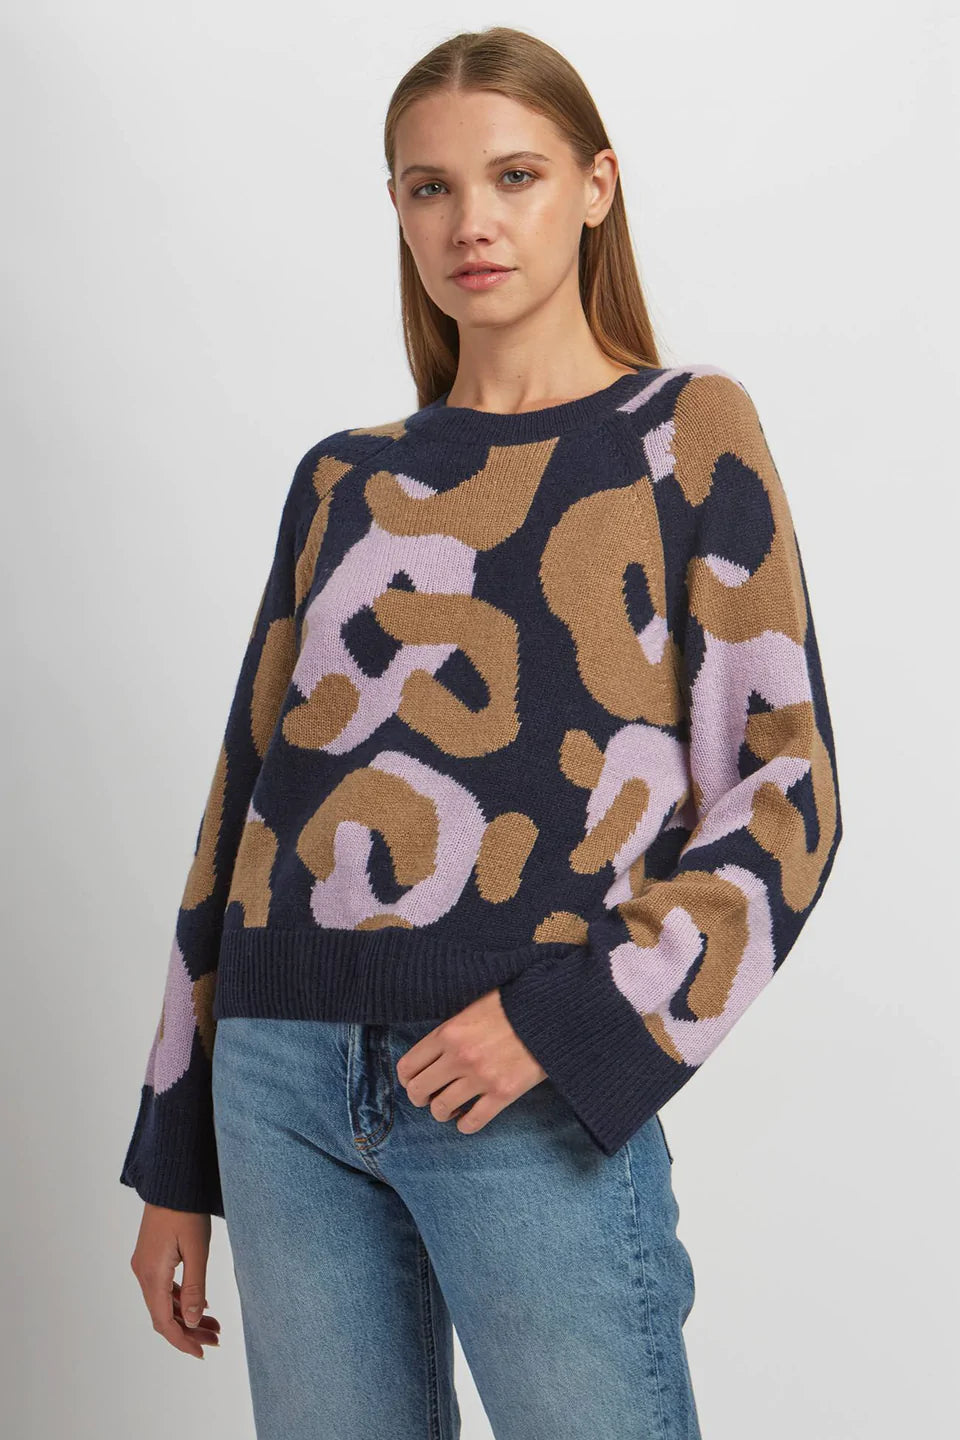 Odilla Sweater in Salted Caramel/Lavender Multi